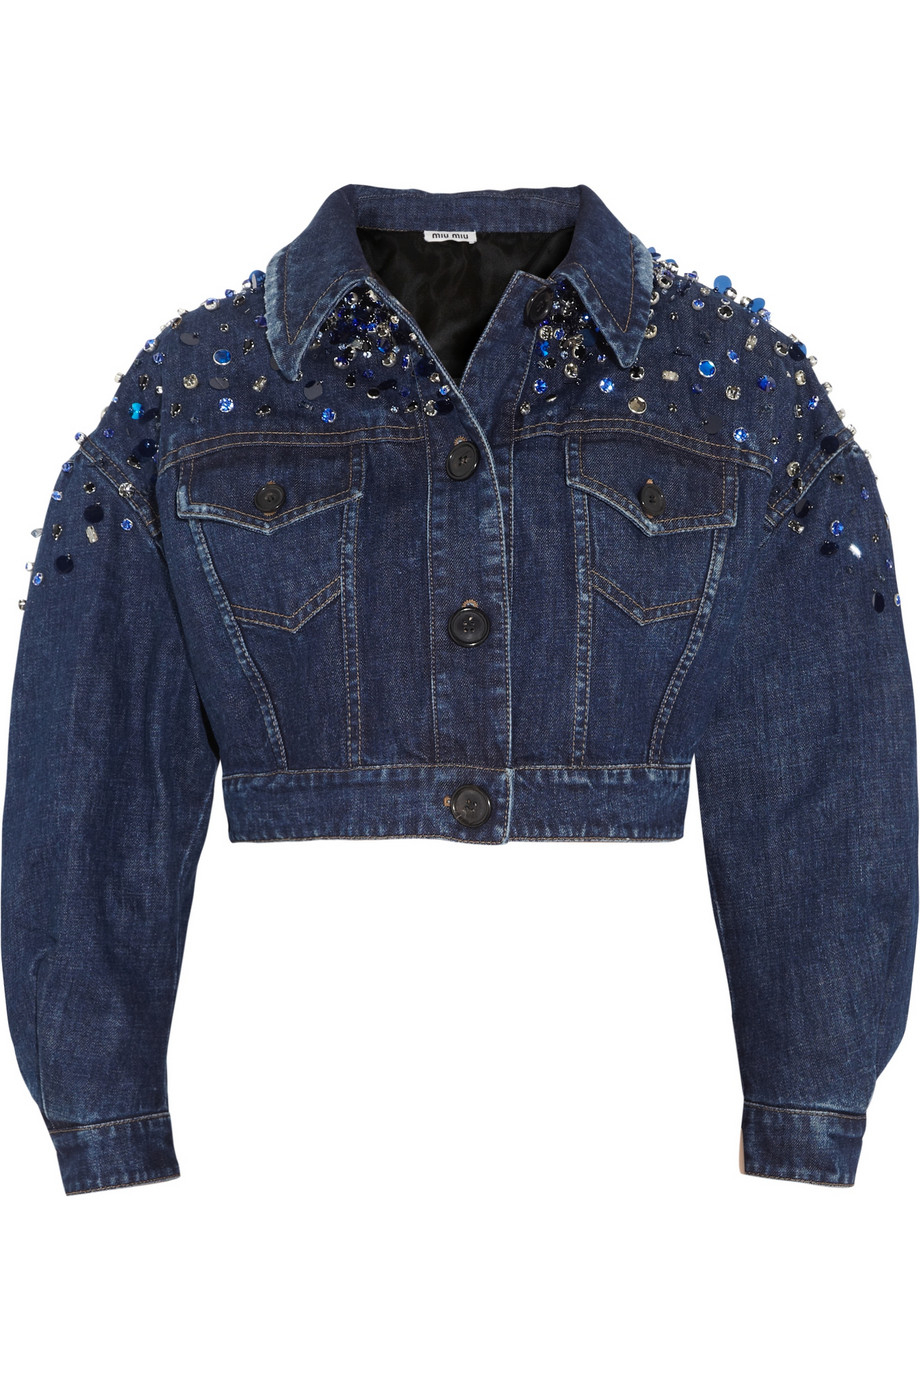 Lyst - Miu Miu Embellished Cropped Denim Jacket in Blue